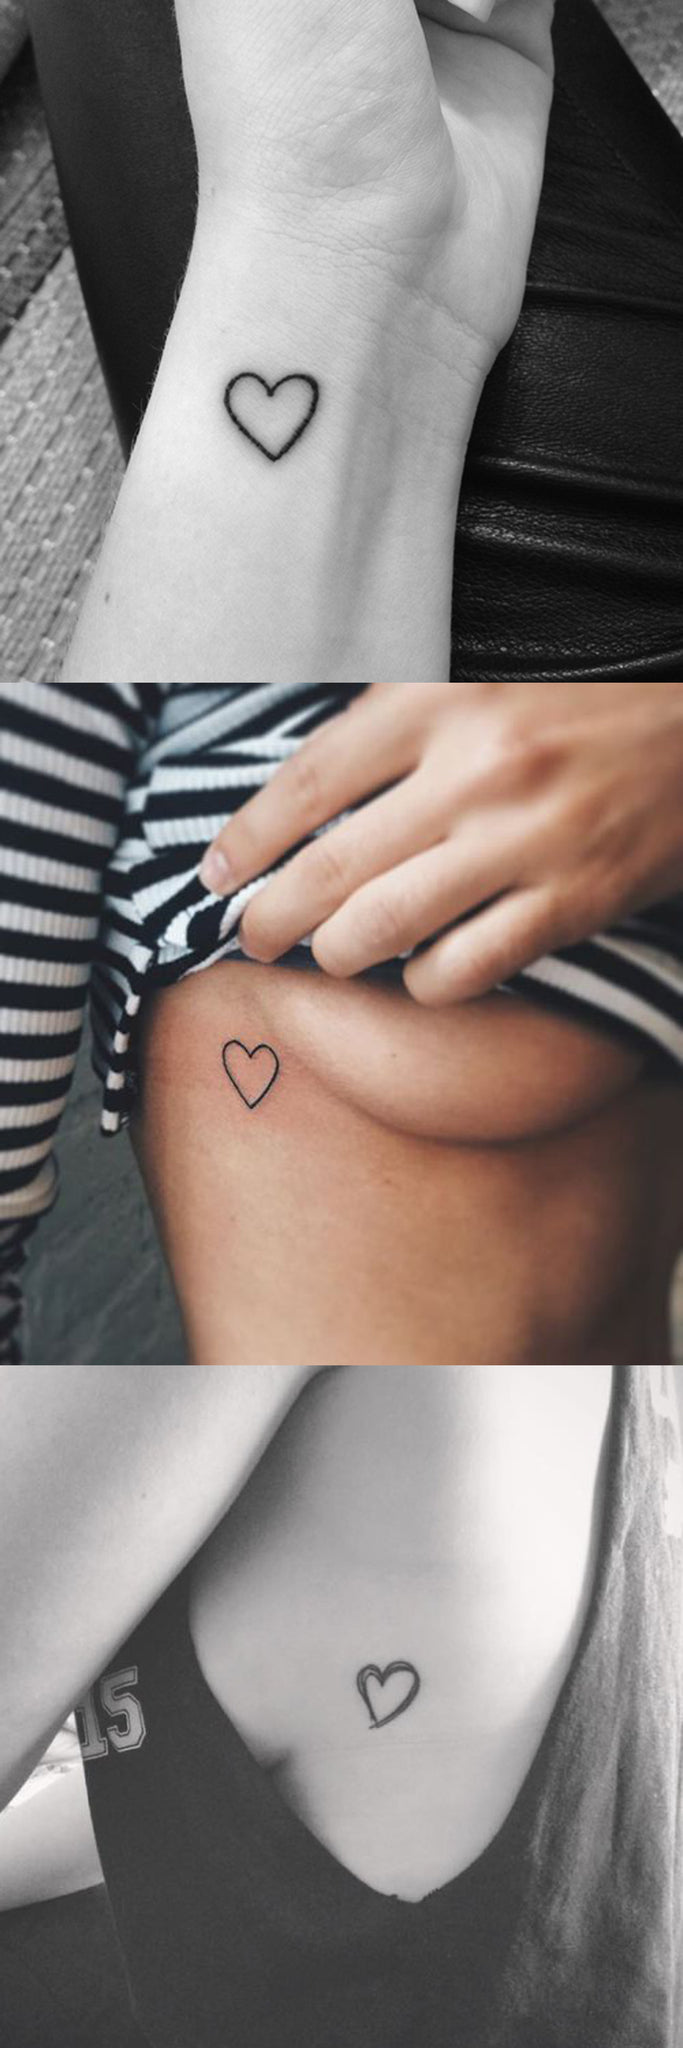 30 Feminine Rib Tattoo Ideas for Women that are VERY Inspirational   MyBodiArt